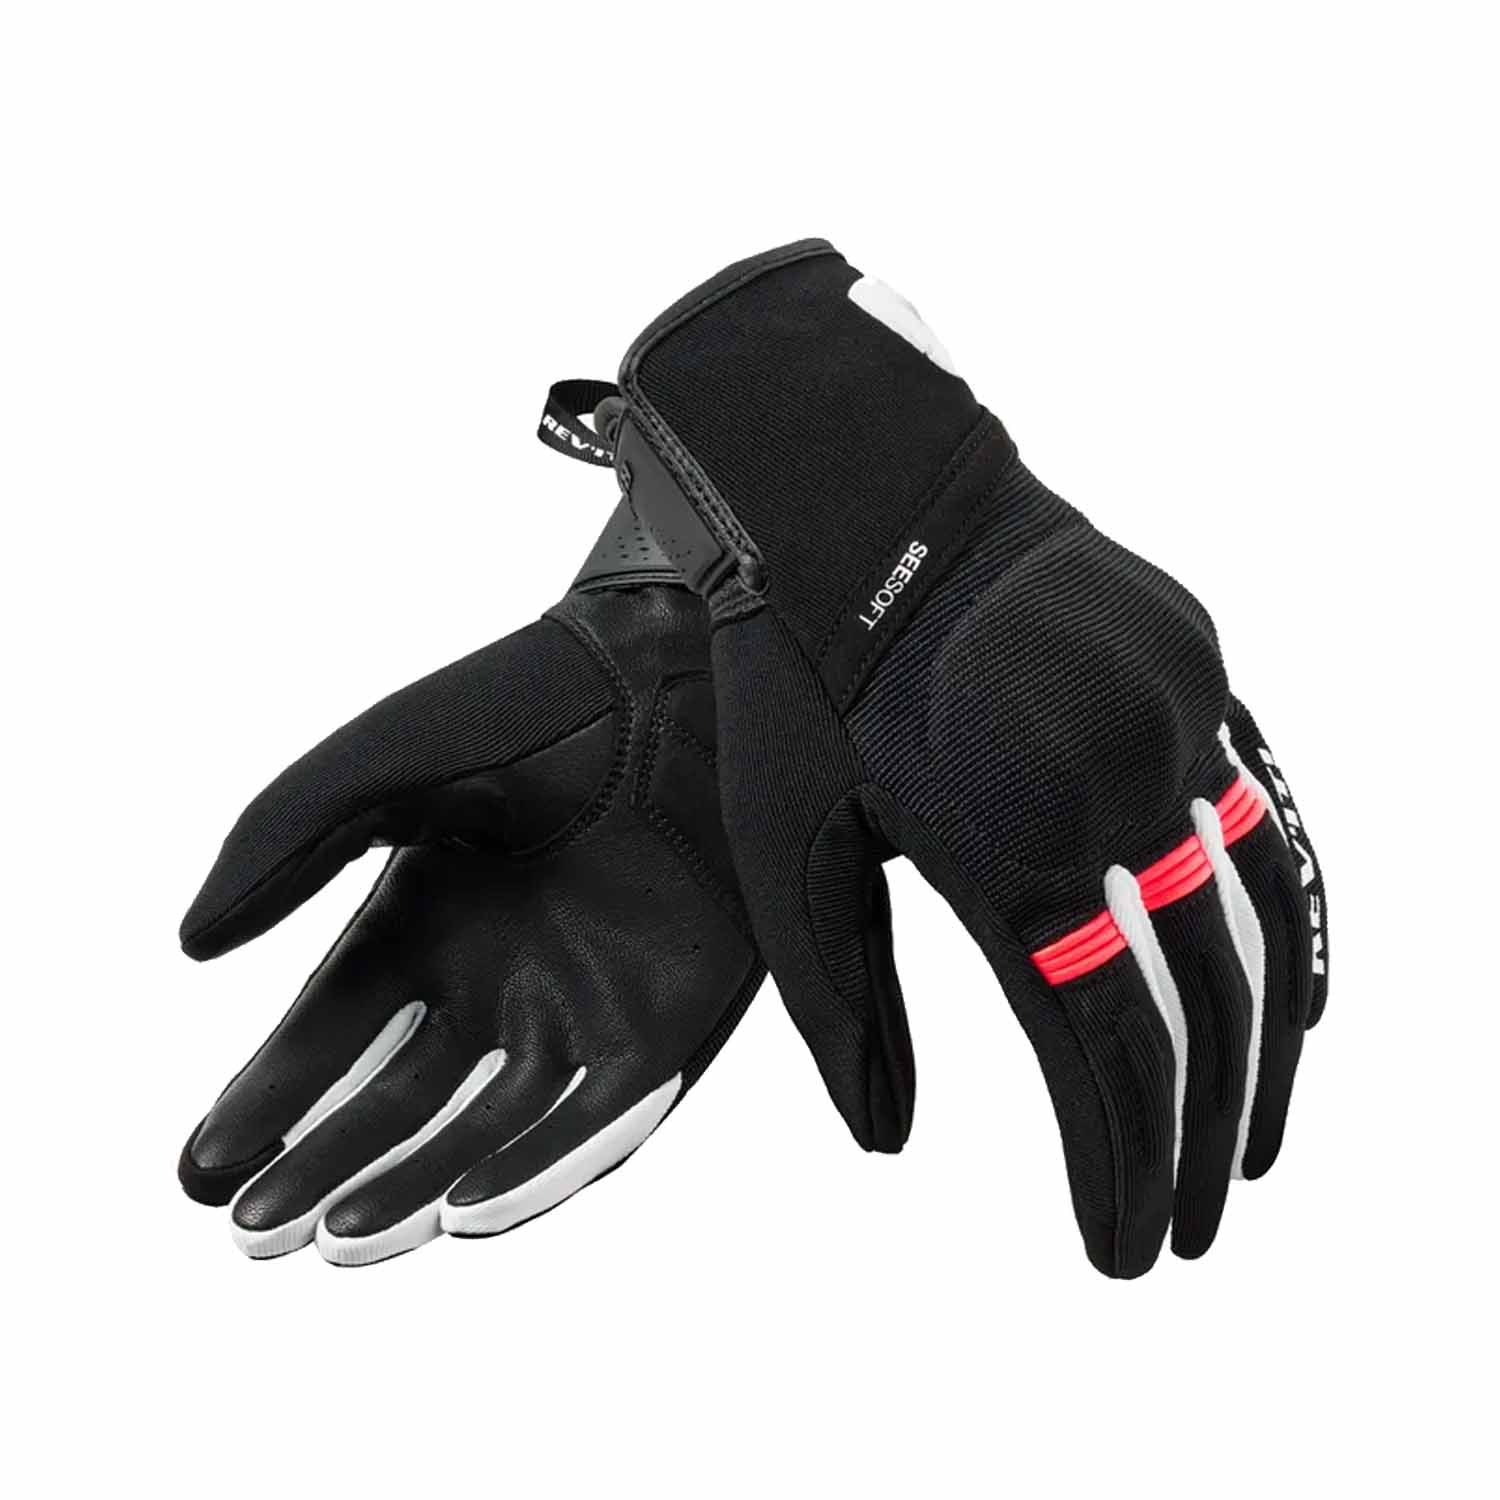 Image of REV'IT! Mosca 2 Ladies Gloves Black Pink Talla S